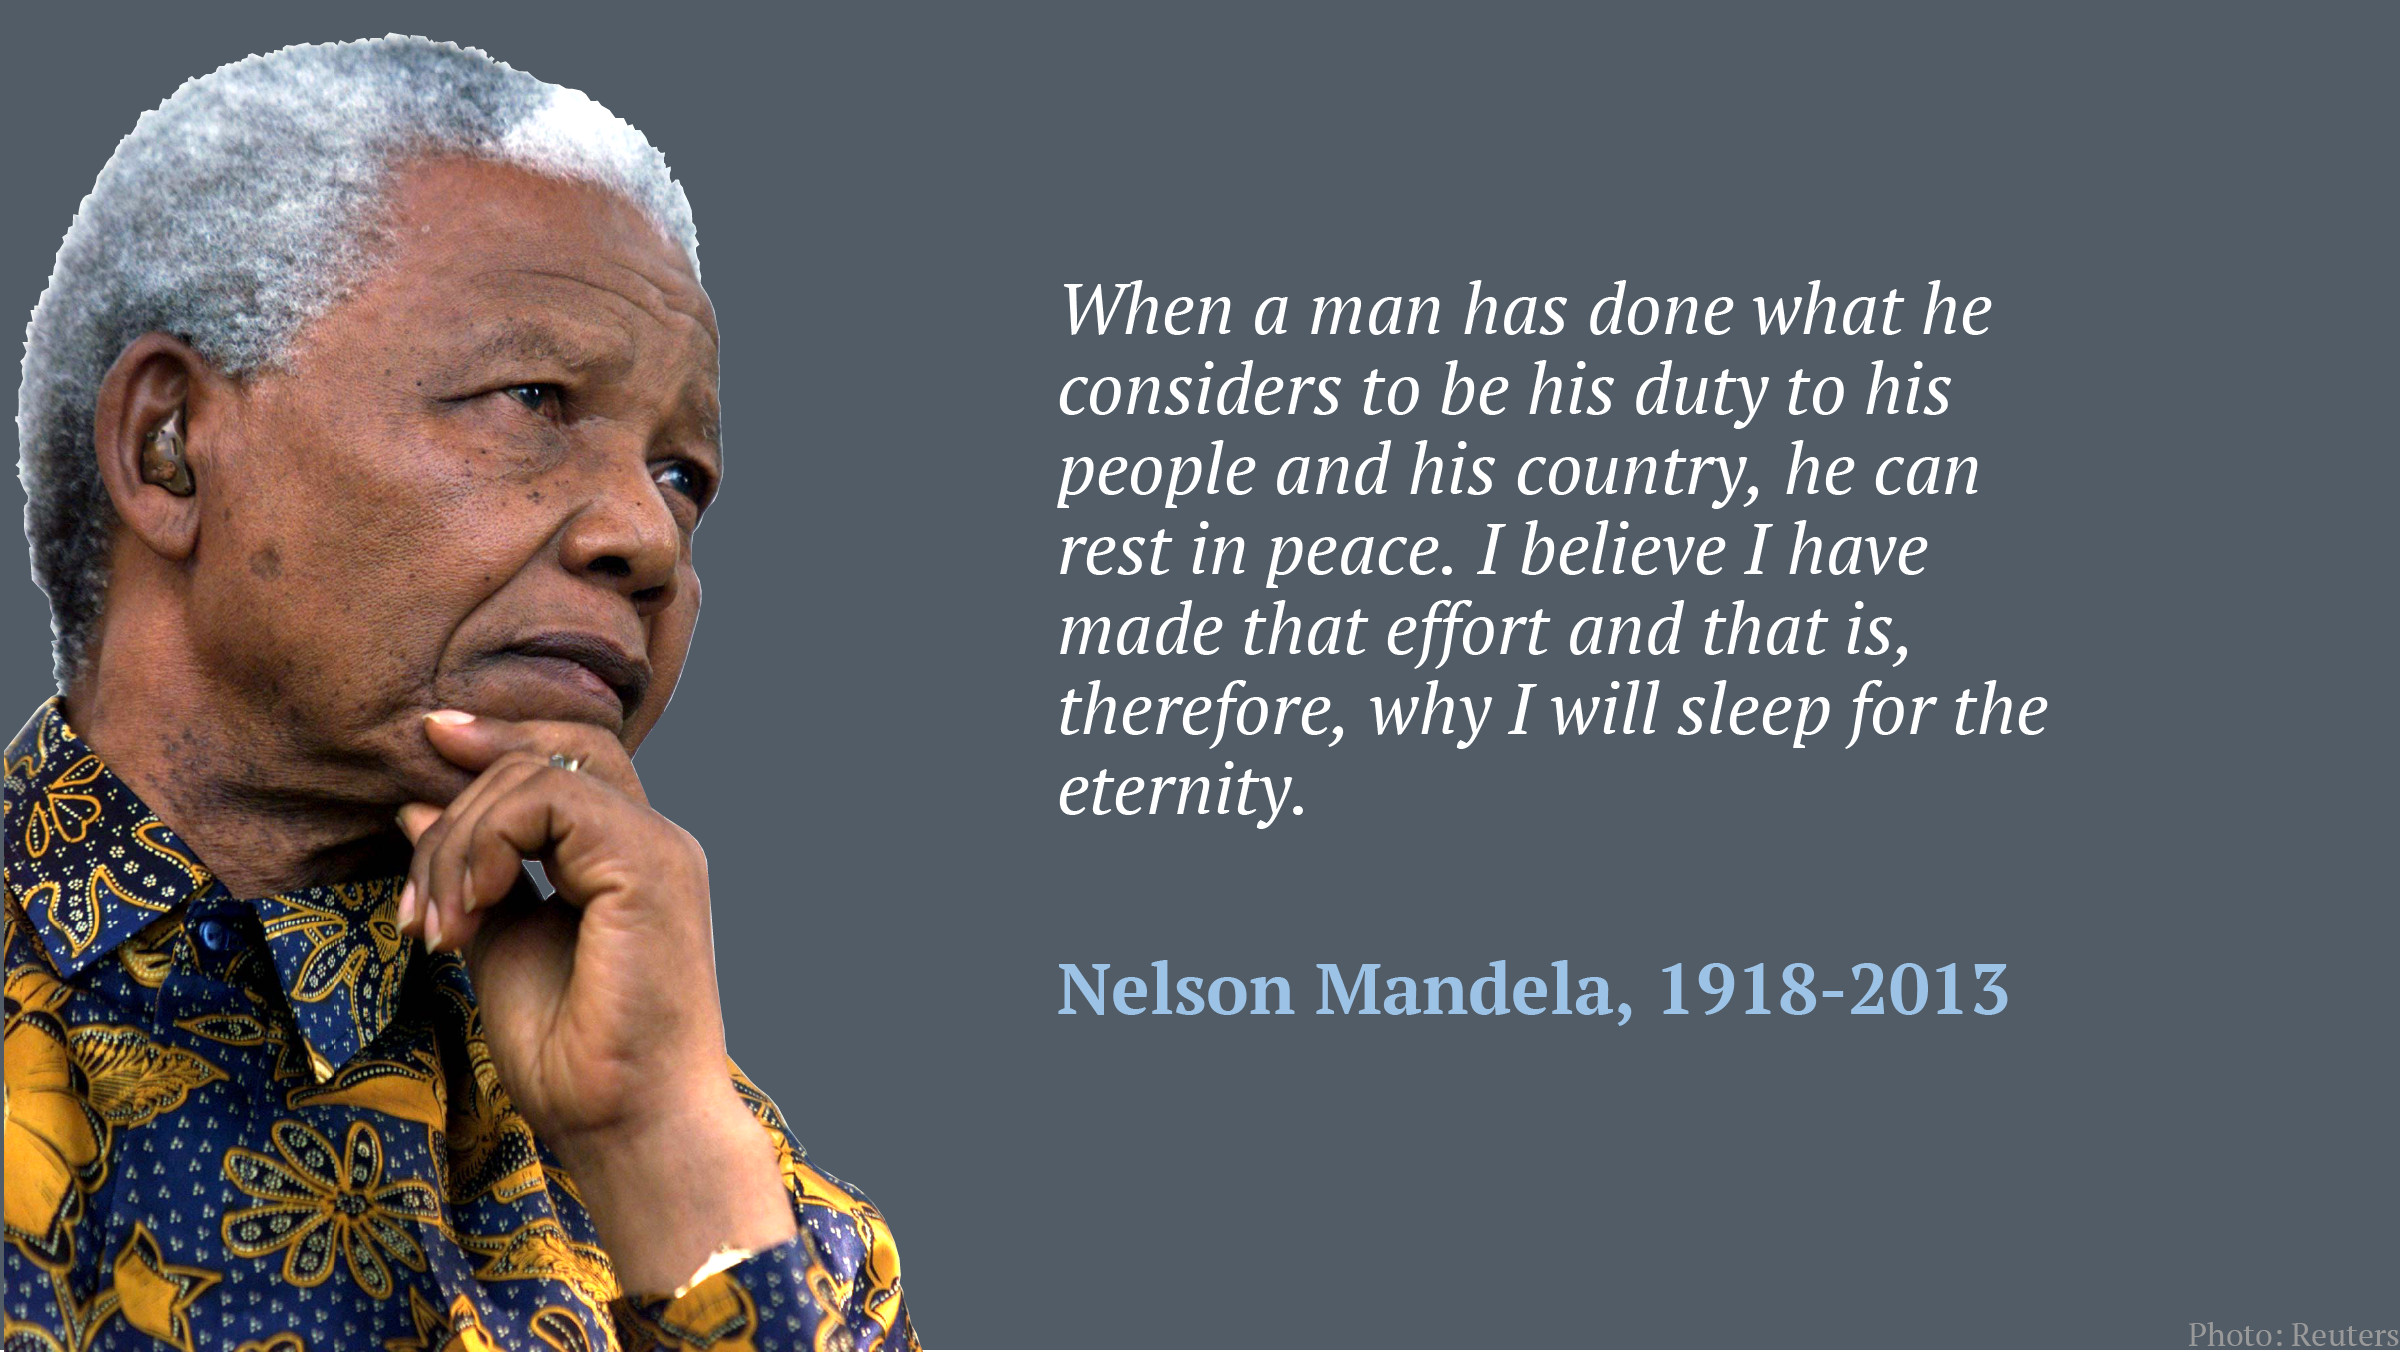 Nelson Mandela Quotes On Leadership
 The wisdom of Nelson Mandela quotes from the most